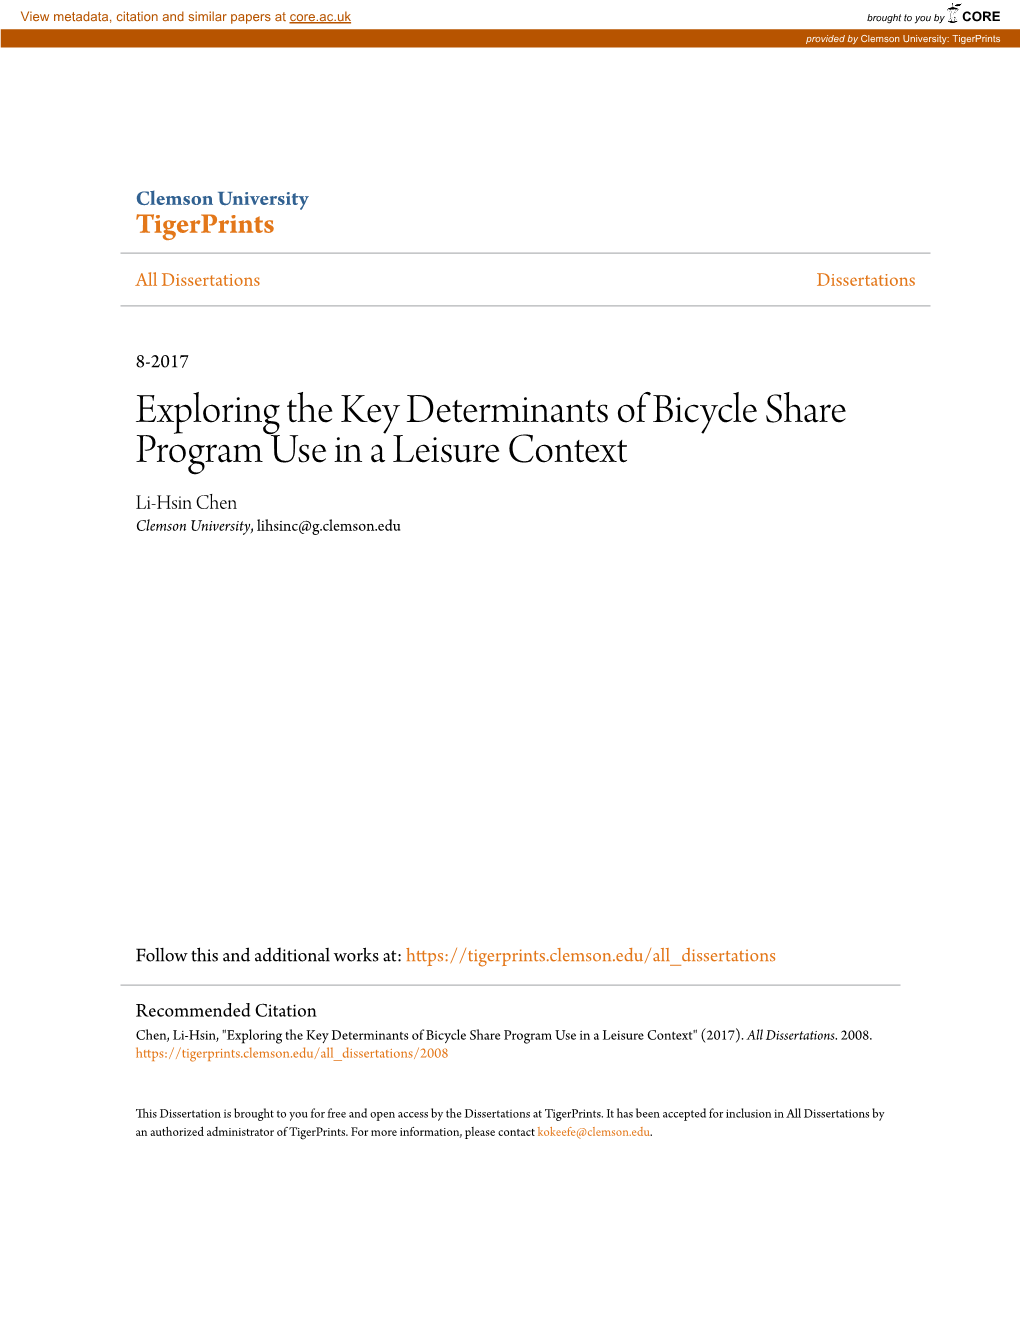 Exploring the Key Determinants of Bicycle Share Program Use in a Leisure Context Li-Hsin Chen Clemson University, Lihsinc@G.Clemson.Edu